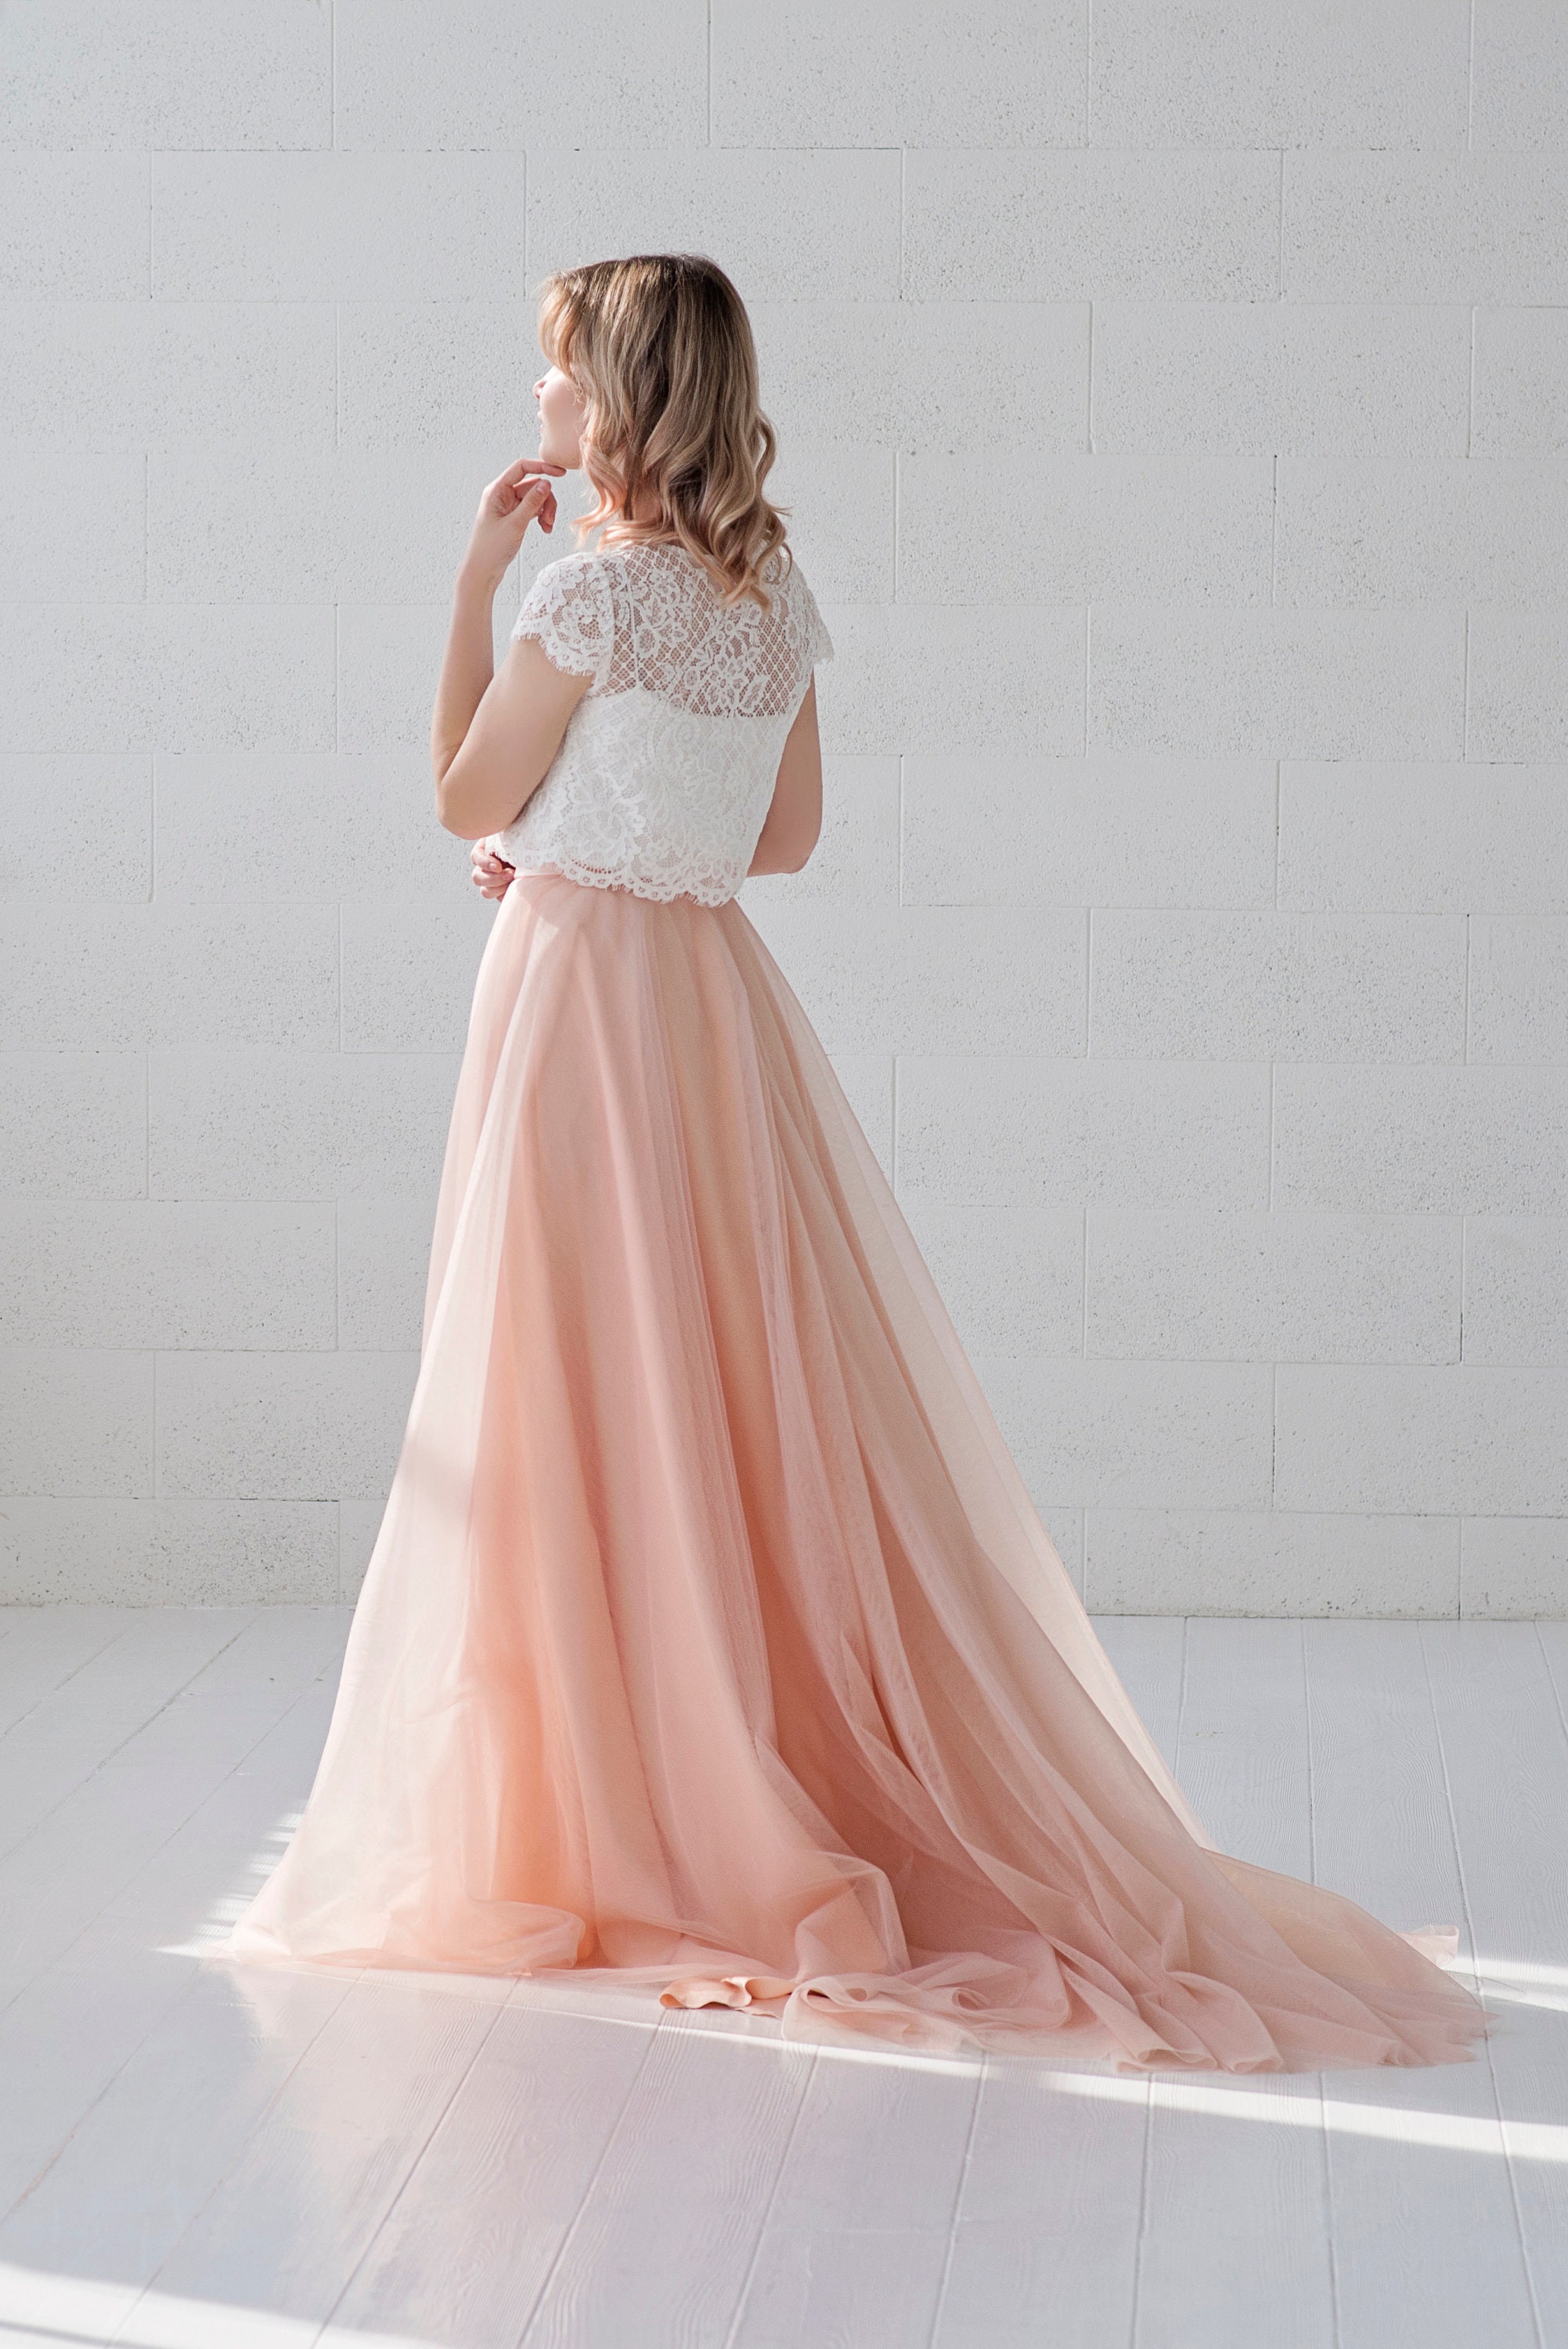 Morgana Rose Gold Peony Bridal Skirt / Slim Tulle Wedding Skirt